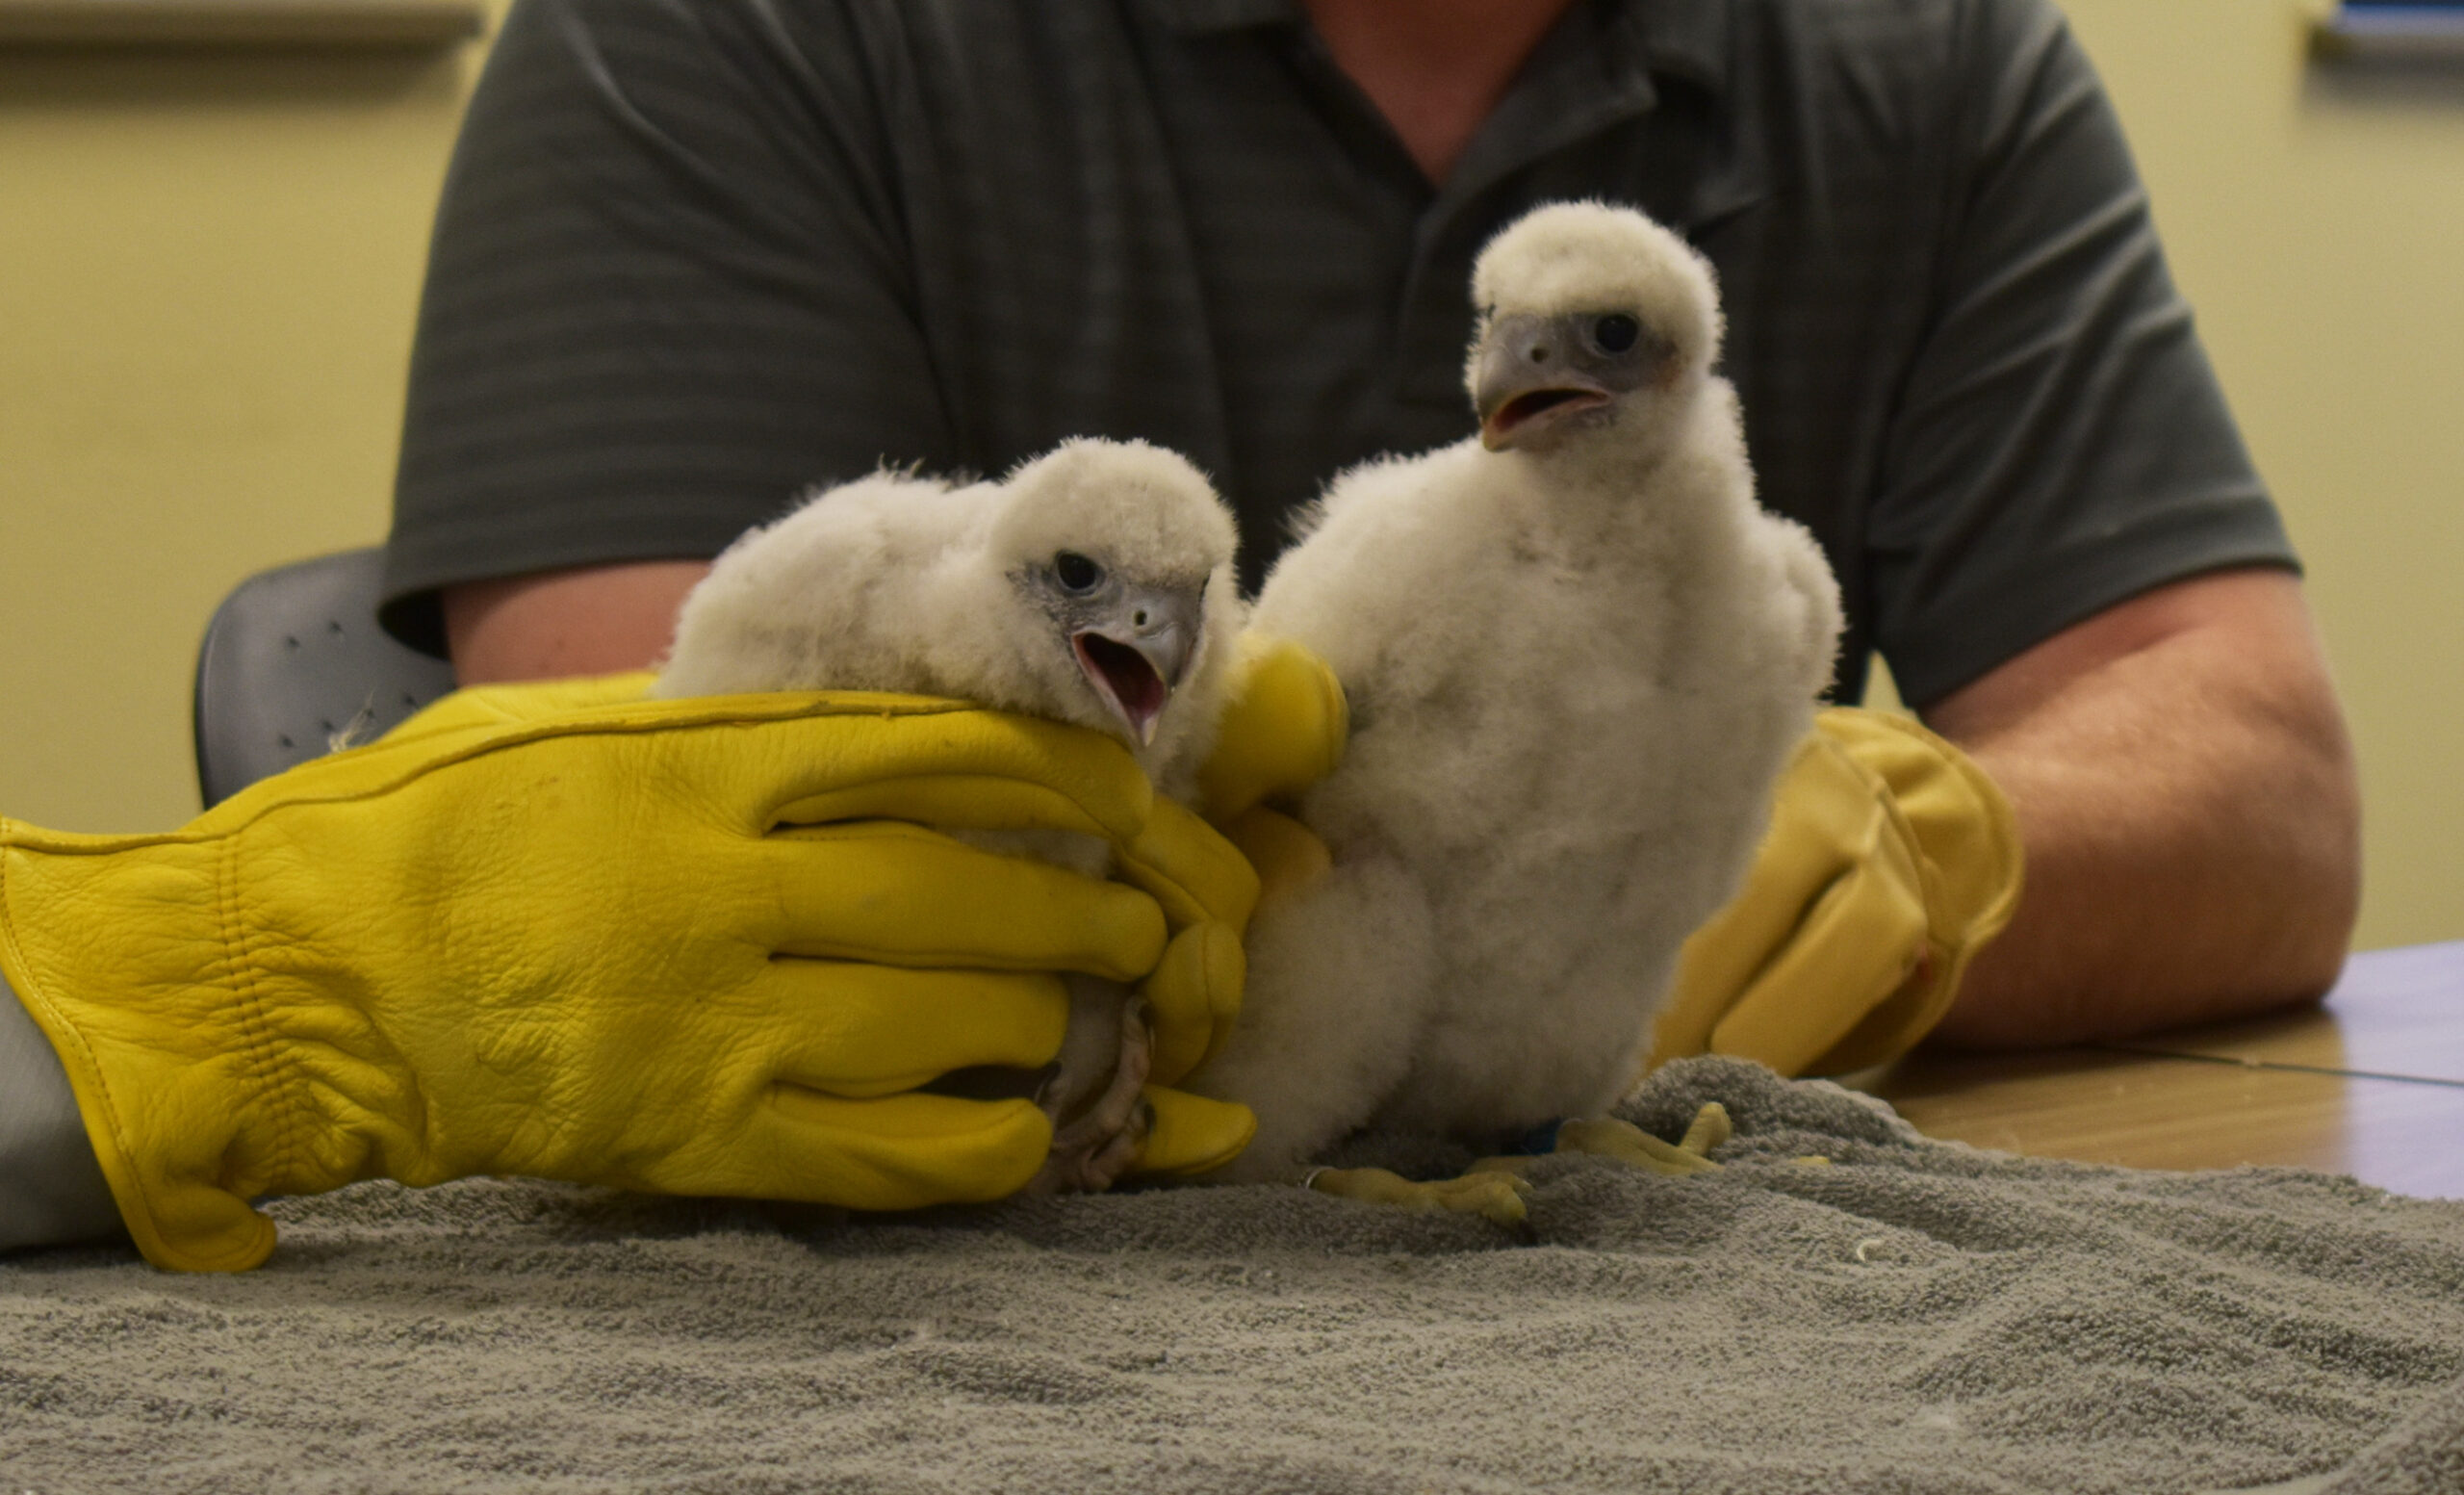 Peregrine falcon nesting program helped fuel raptors’ return to Wisconsin